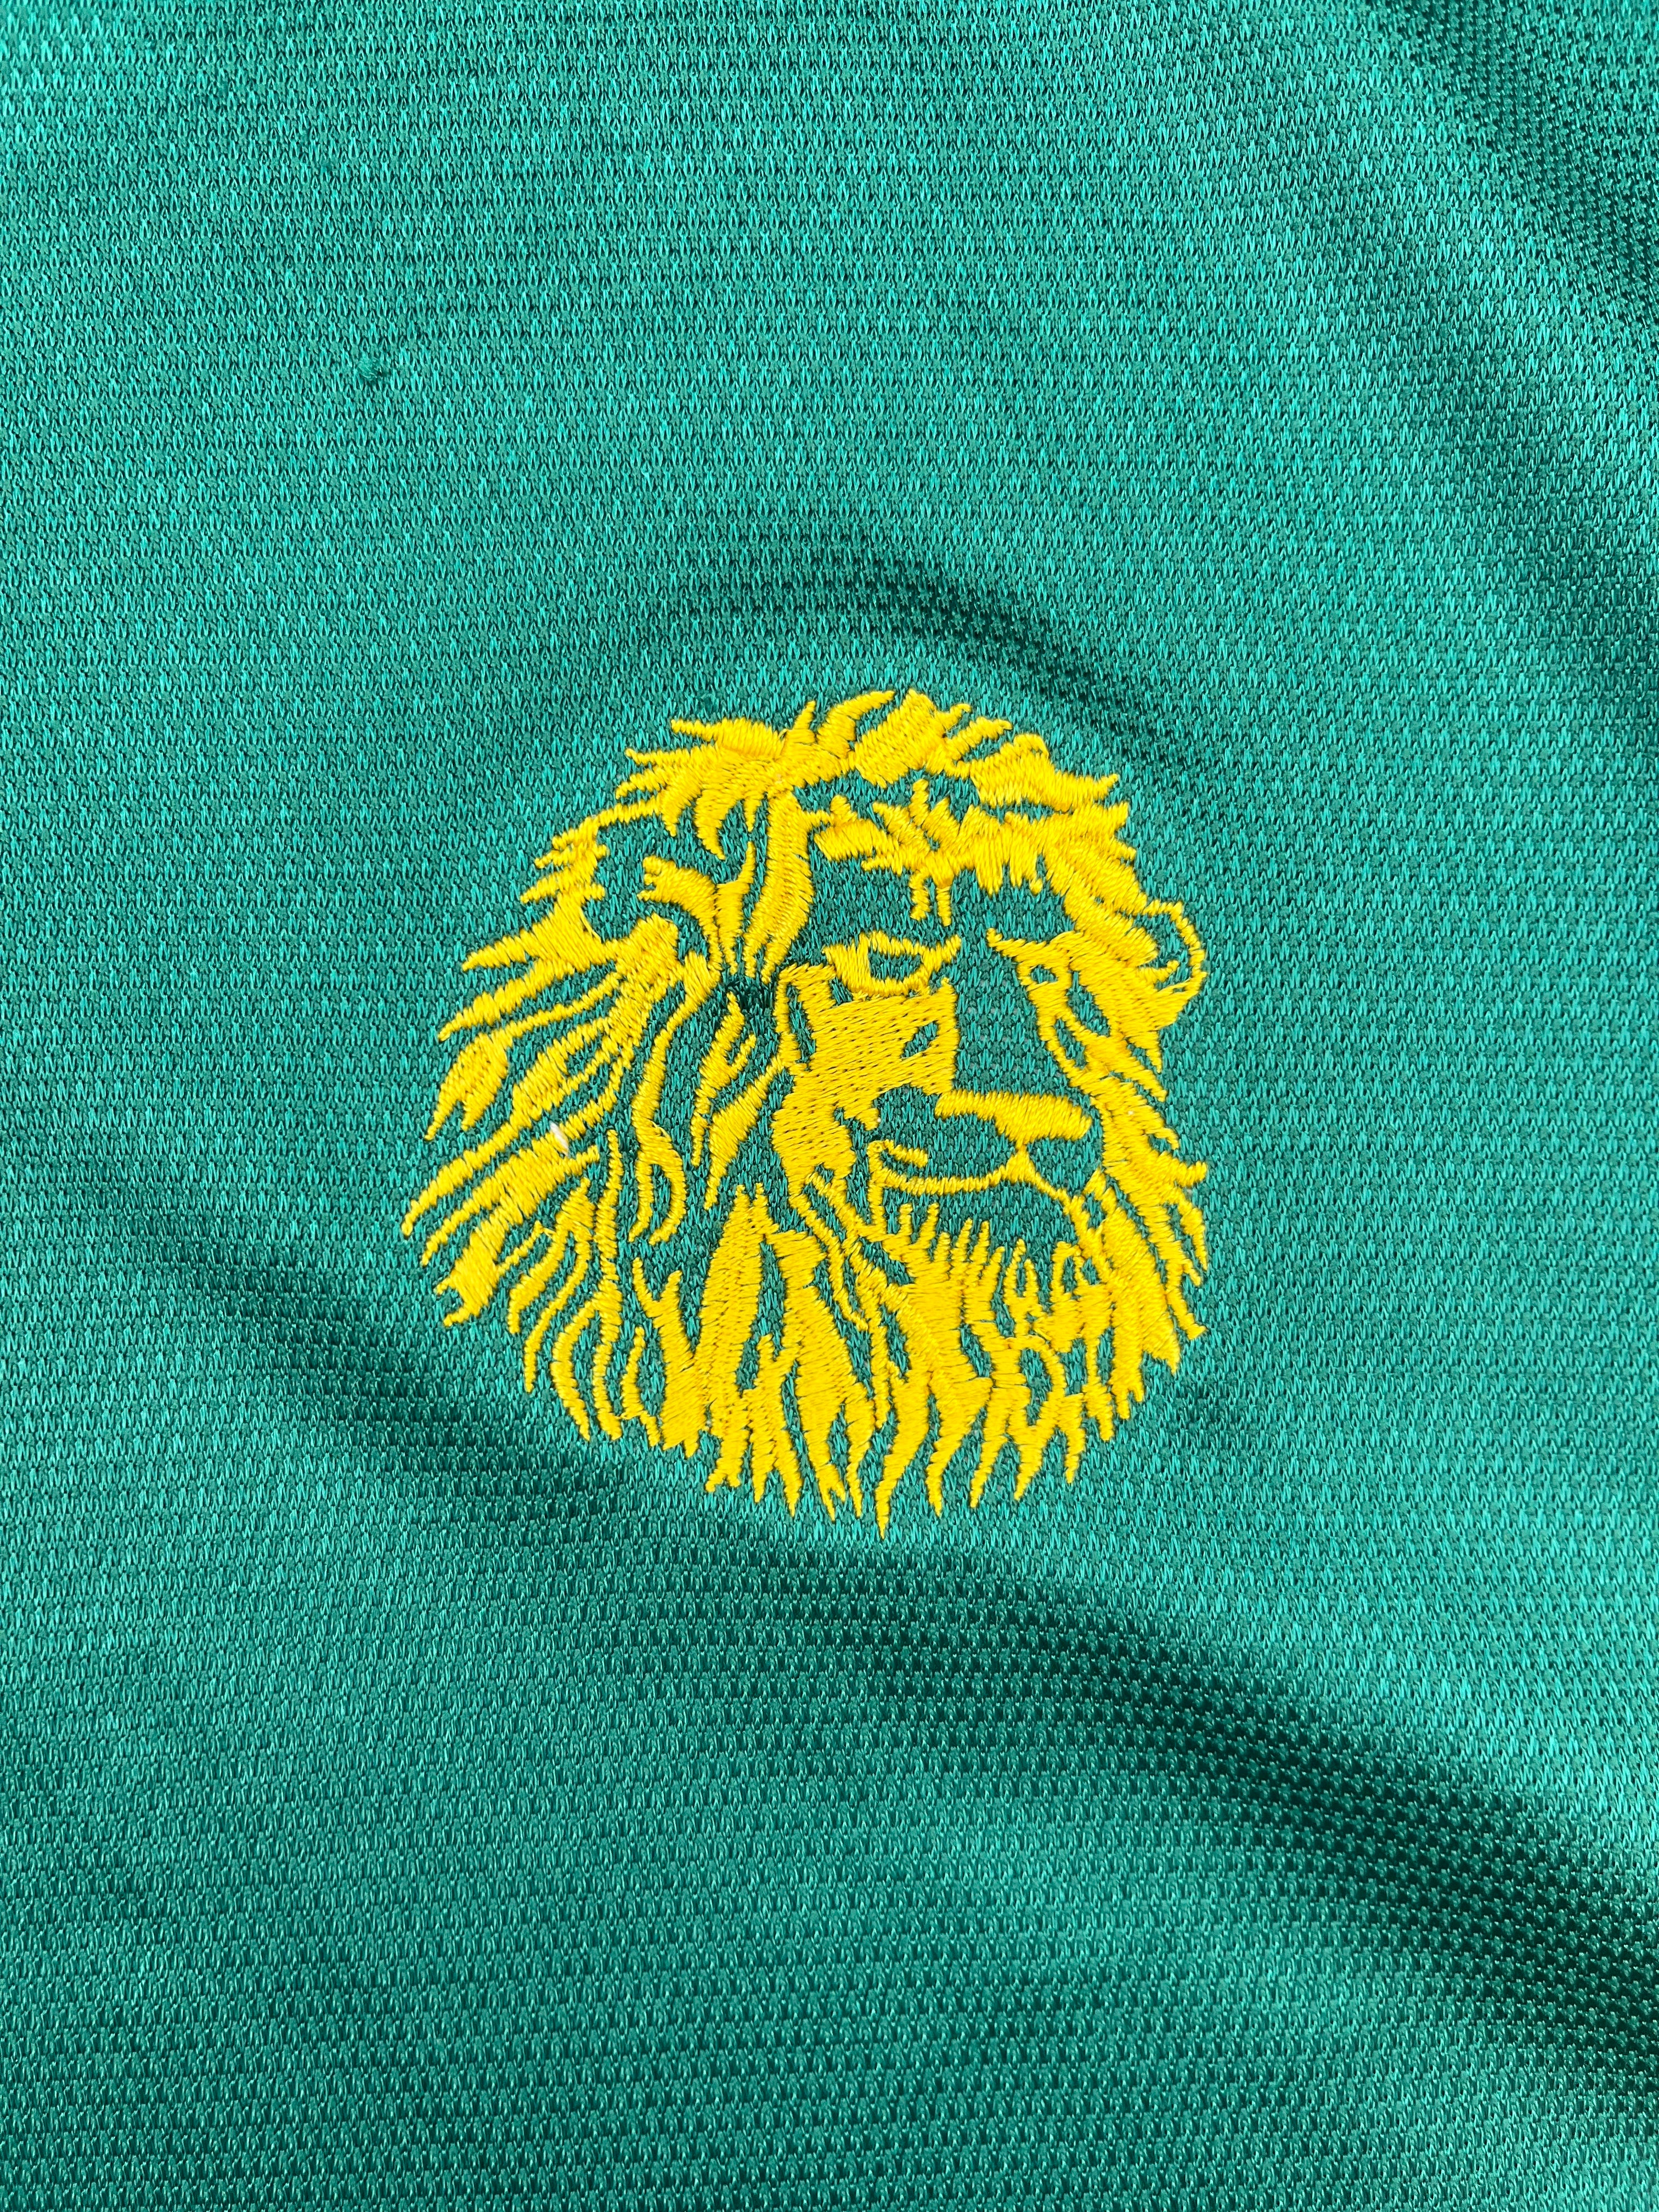 1999/00 Cameroon Home Shirt (L) 8/10